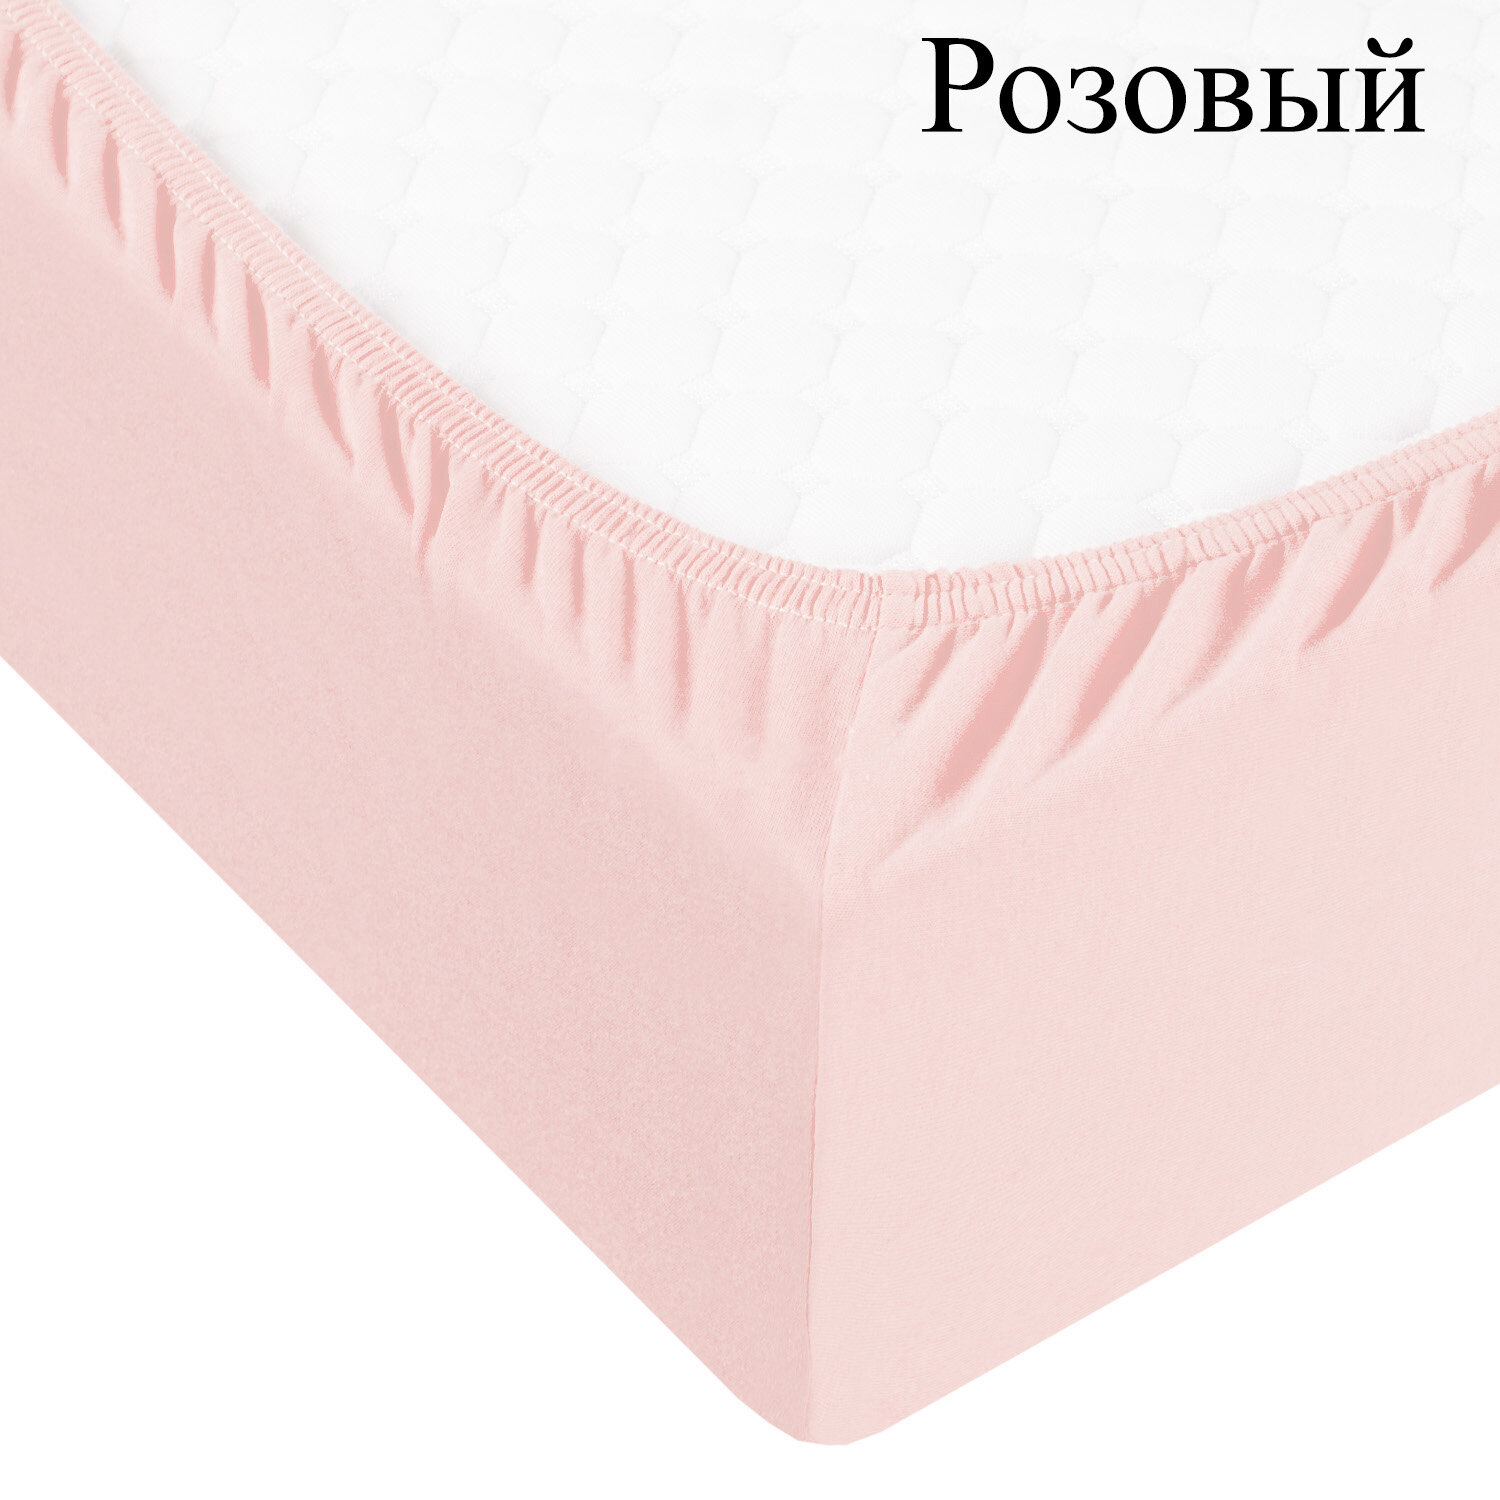 Простыня на резинке Boaz Цвет: Розовый (140х200), размер 140х200 adl542350 Простыня на резинке Boaz Цвет: Розовый (140х200) - фото 1